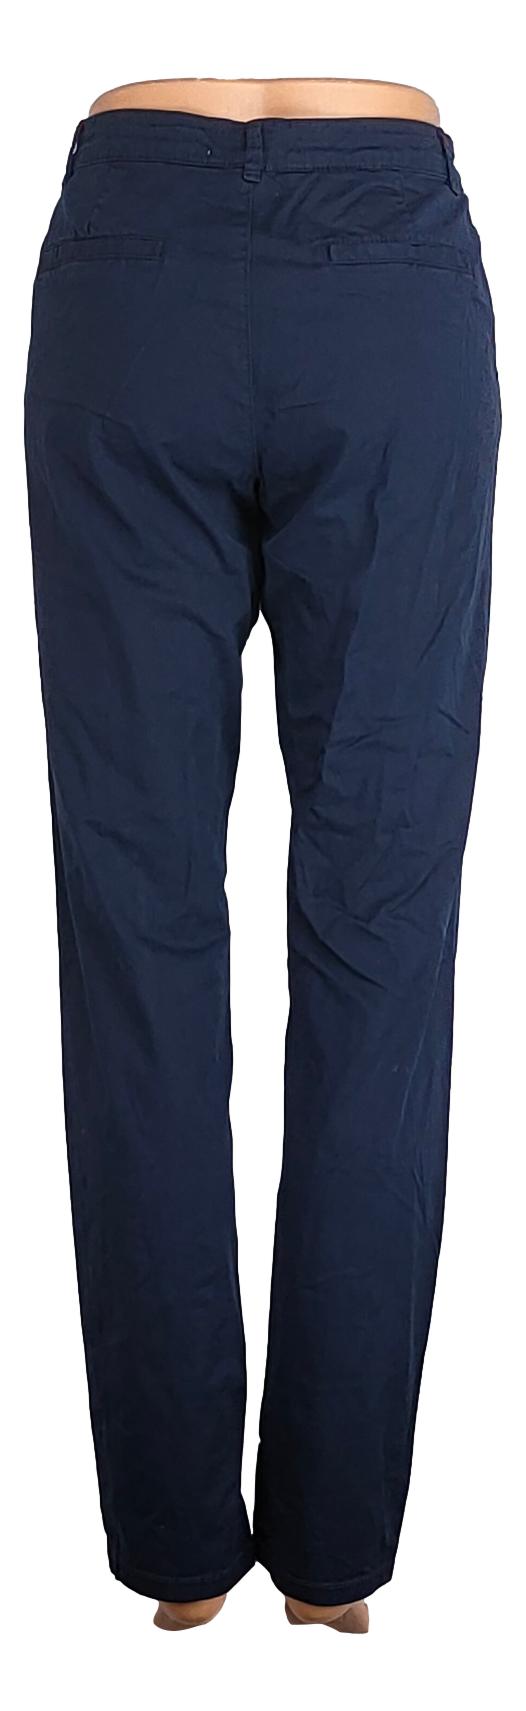 Pantalon Promod - taille 38